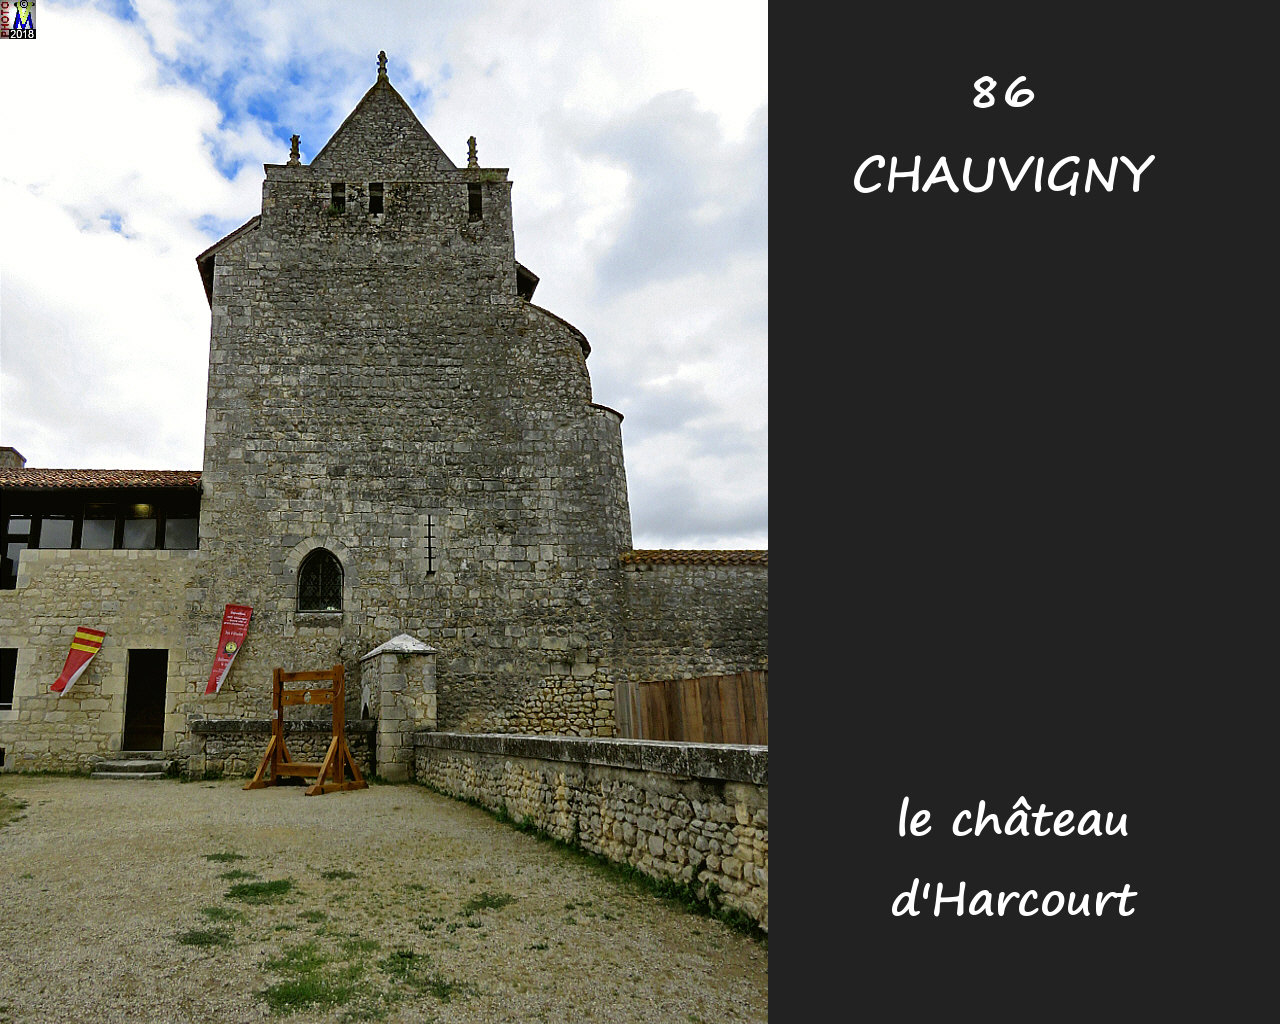 86CHAUVIGNY_chateau-Harcourt_1006.jpg